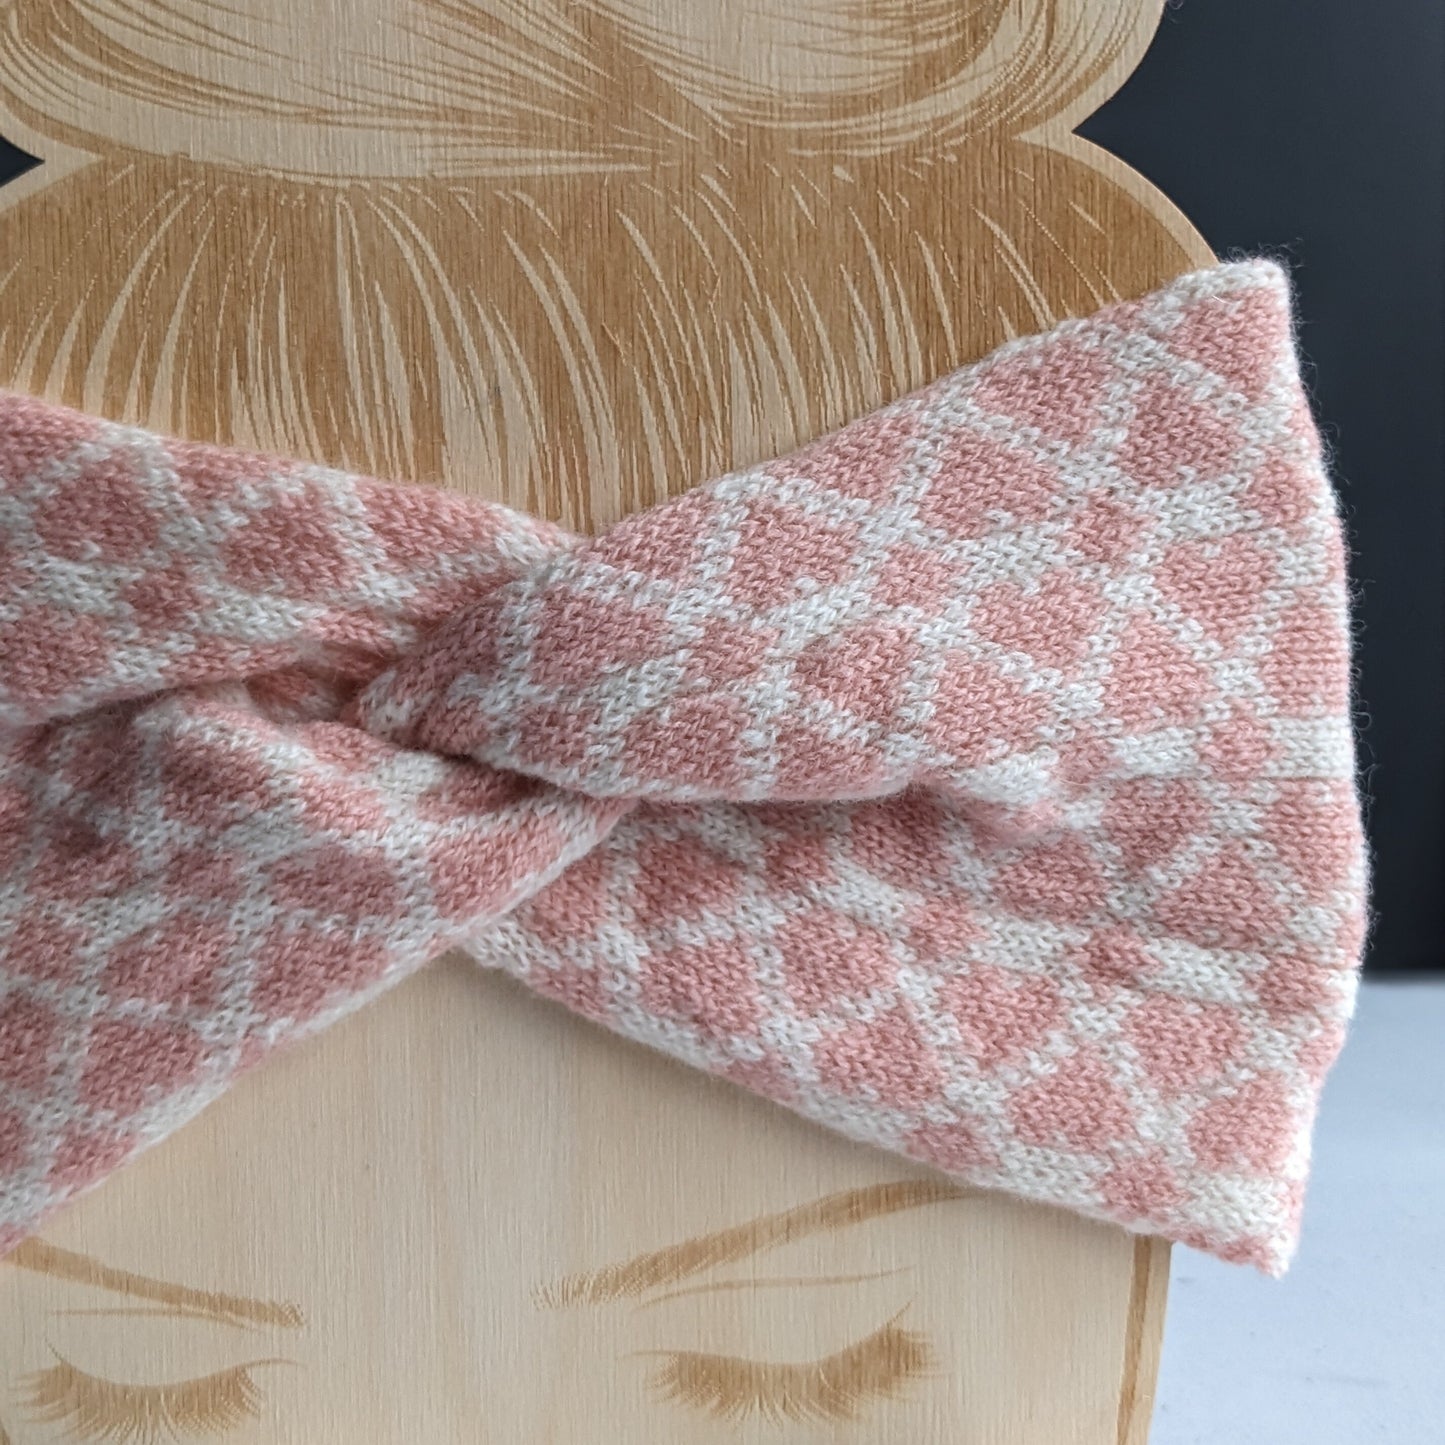 Merino wool ear warmer knitted headband ecru with pale pink hearts